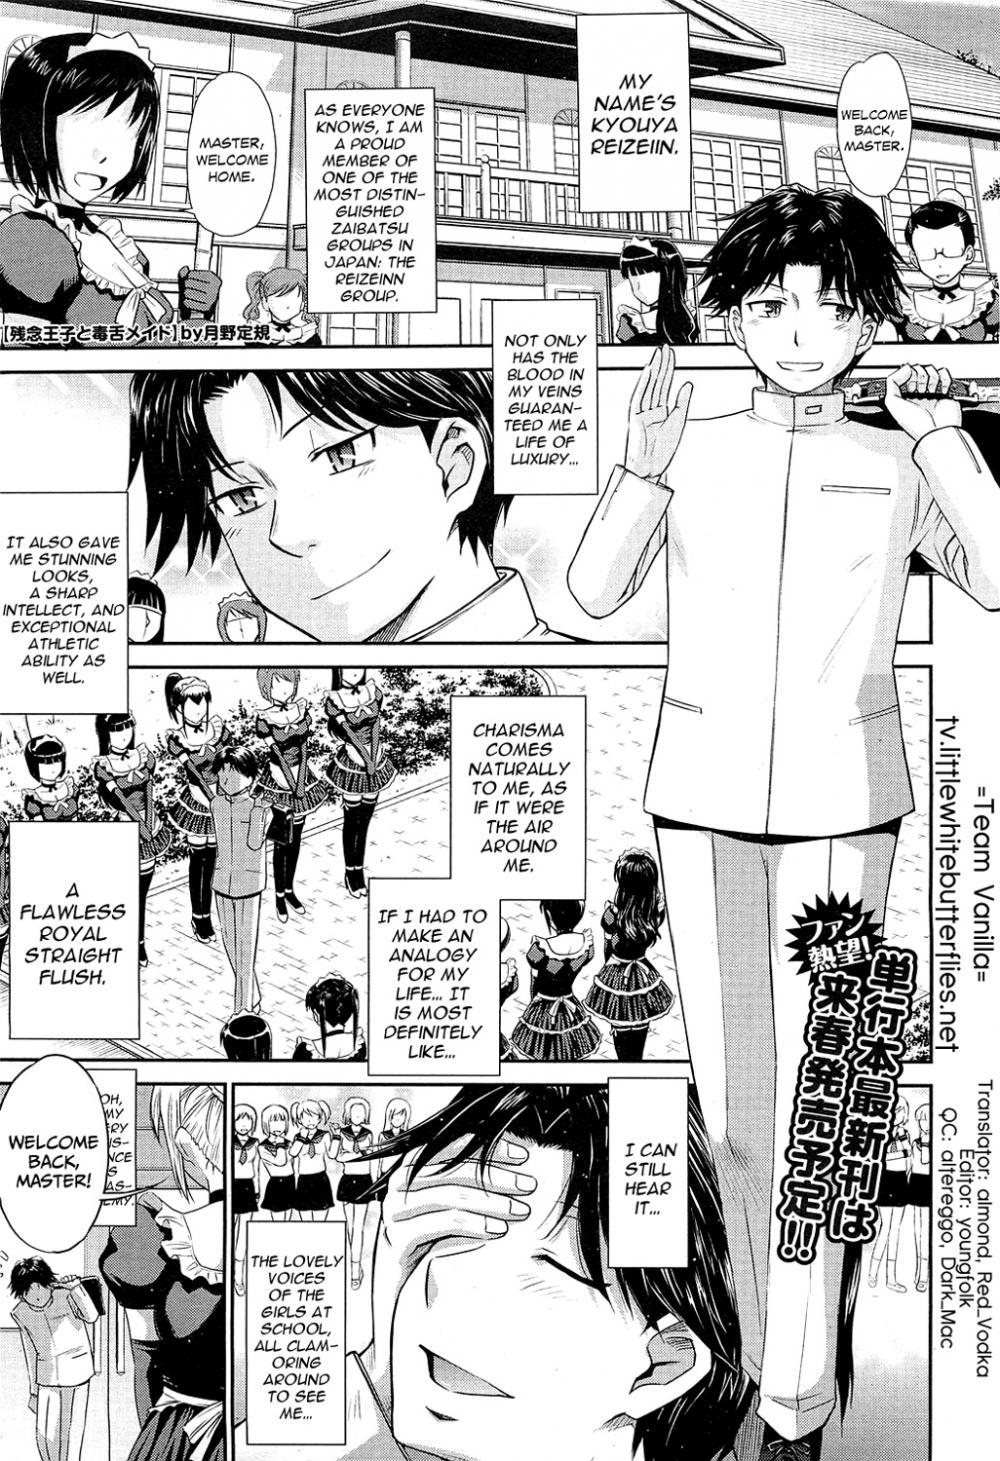 Hentai Manga Comic-Pathetic Prince and Spiteful Maid-Chapter 1-1